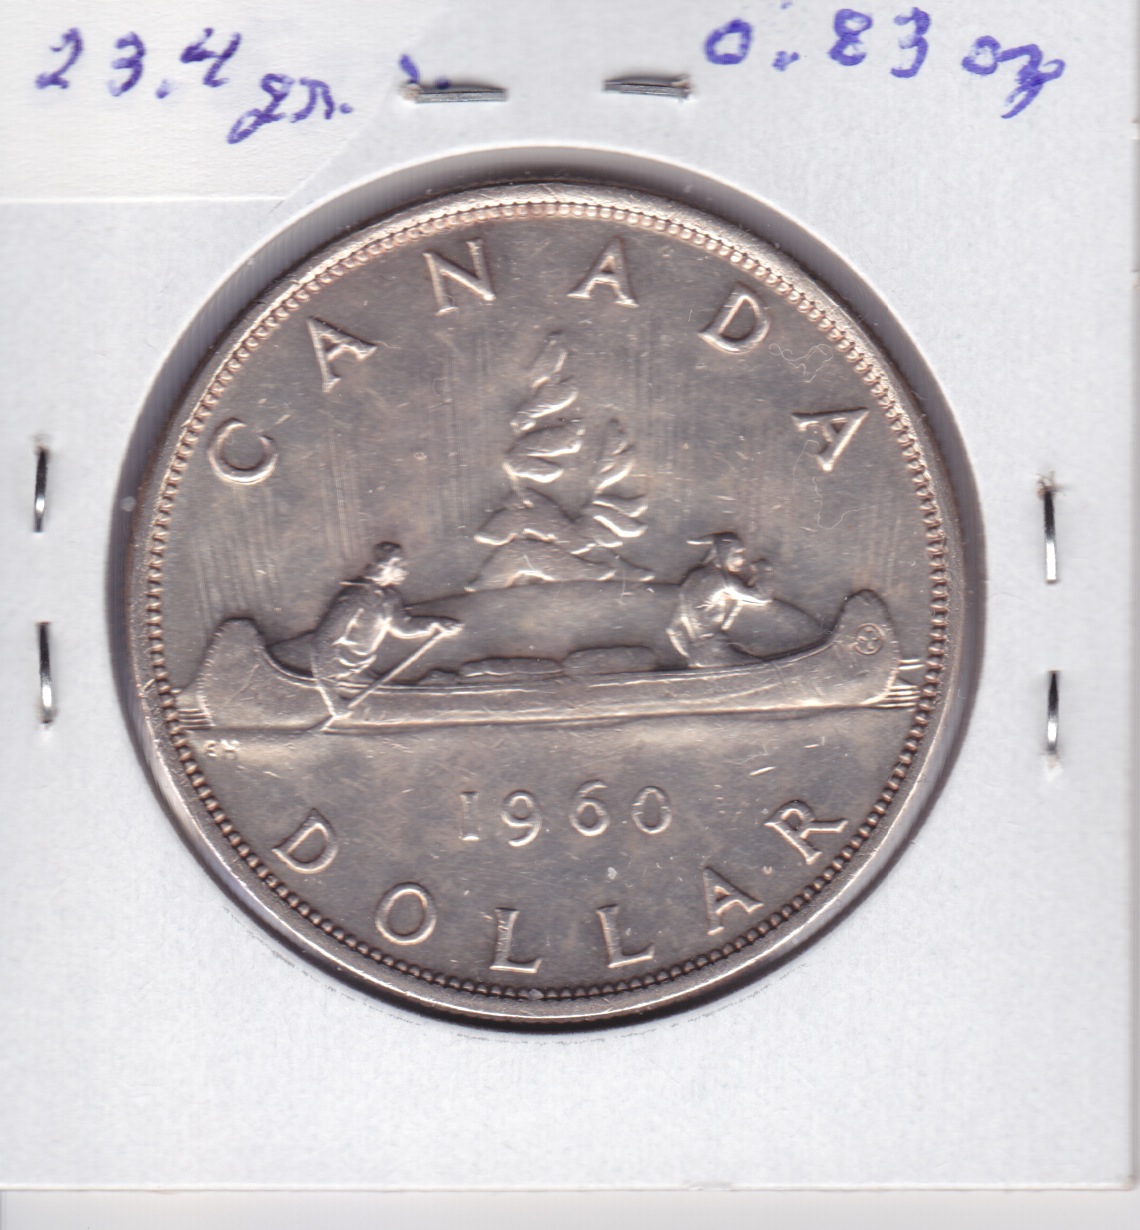 1 dollar 1960 - verso.jpeg